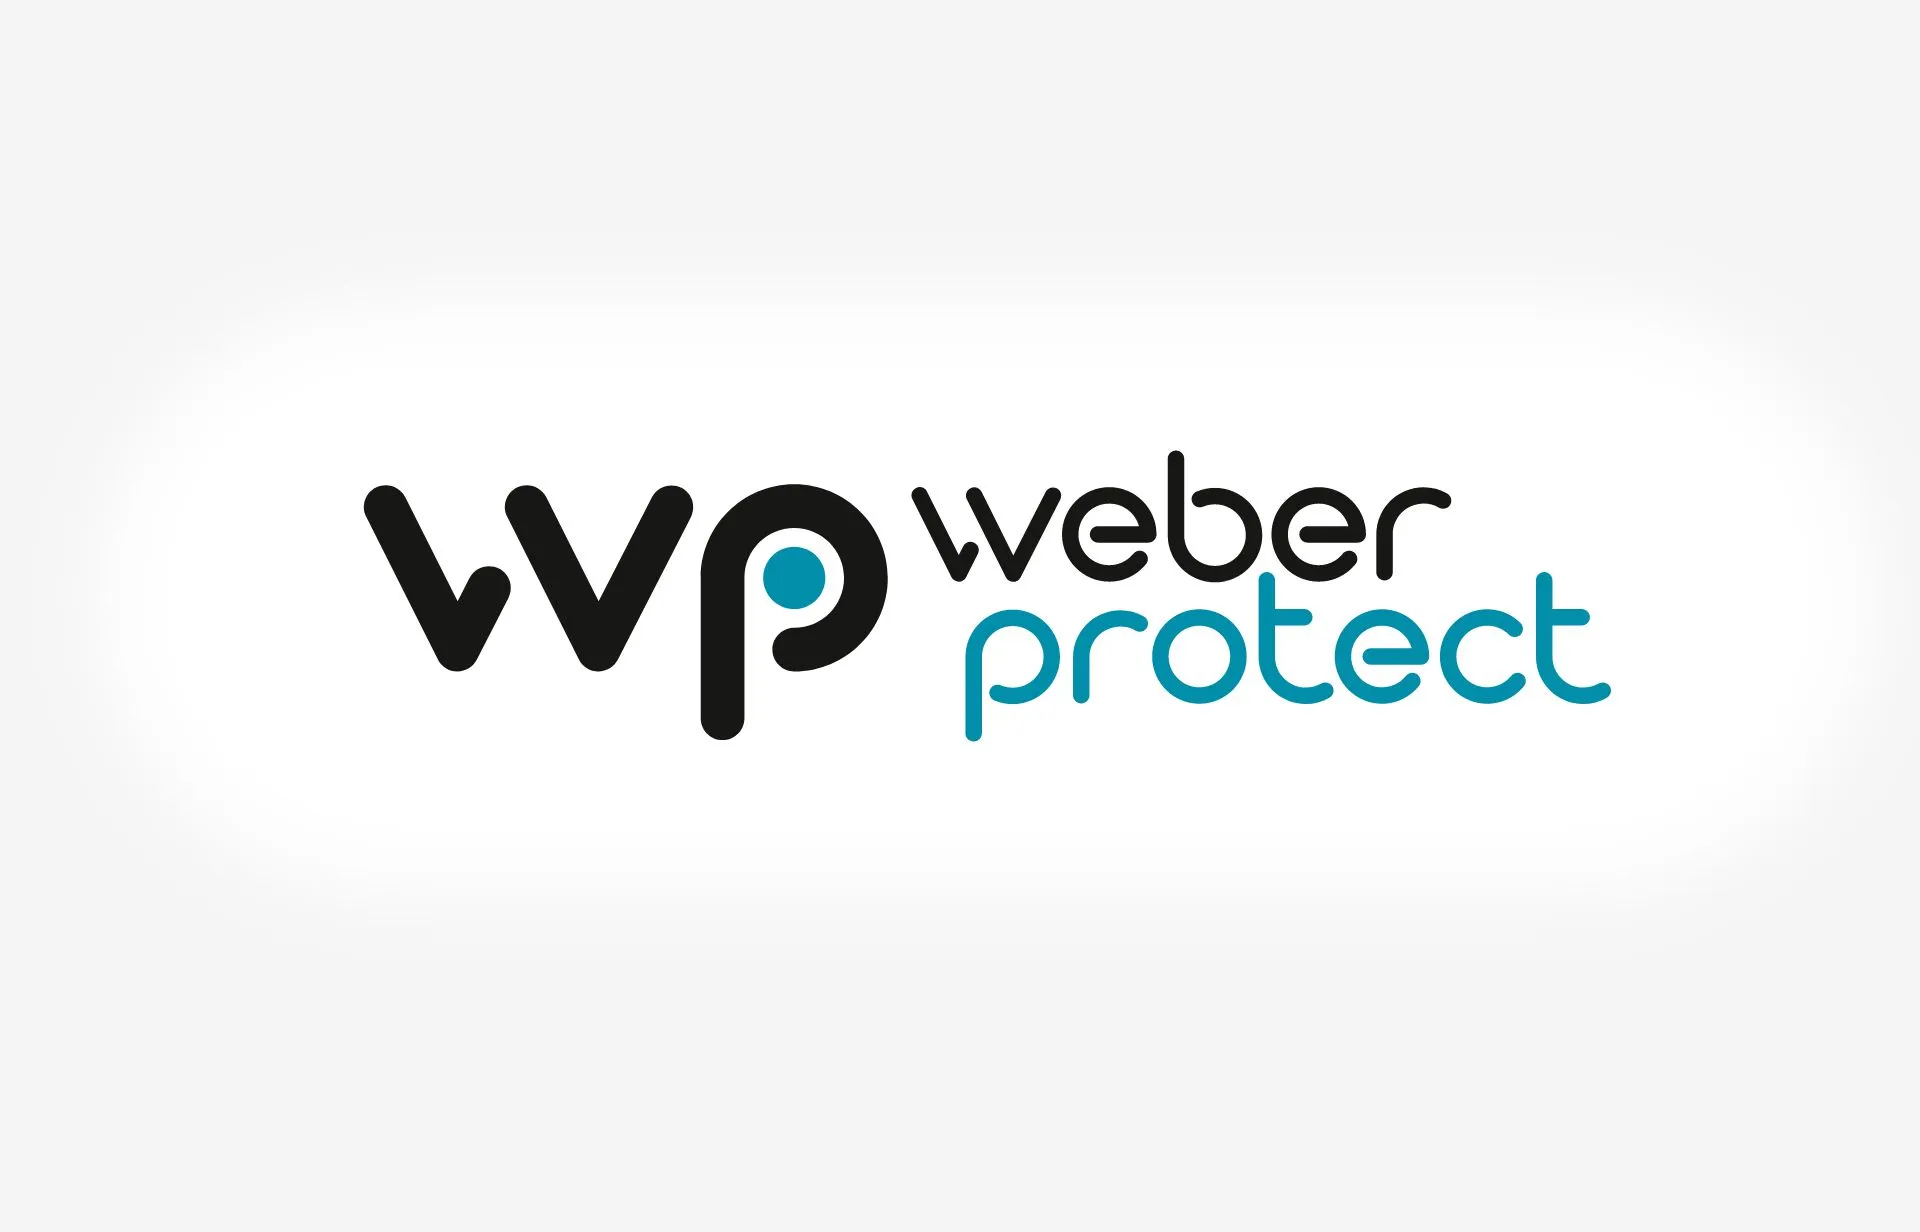 Weber Protect Wordmark